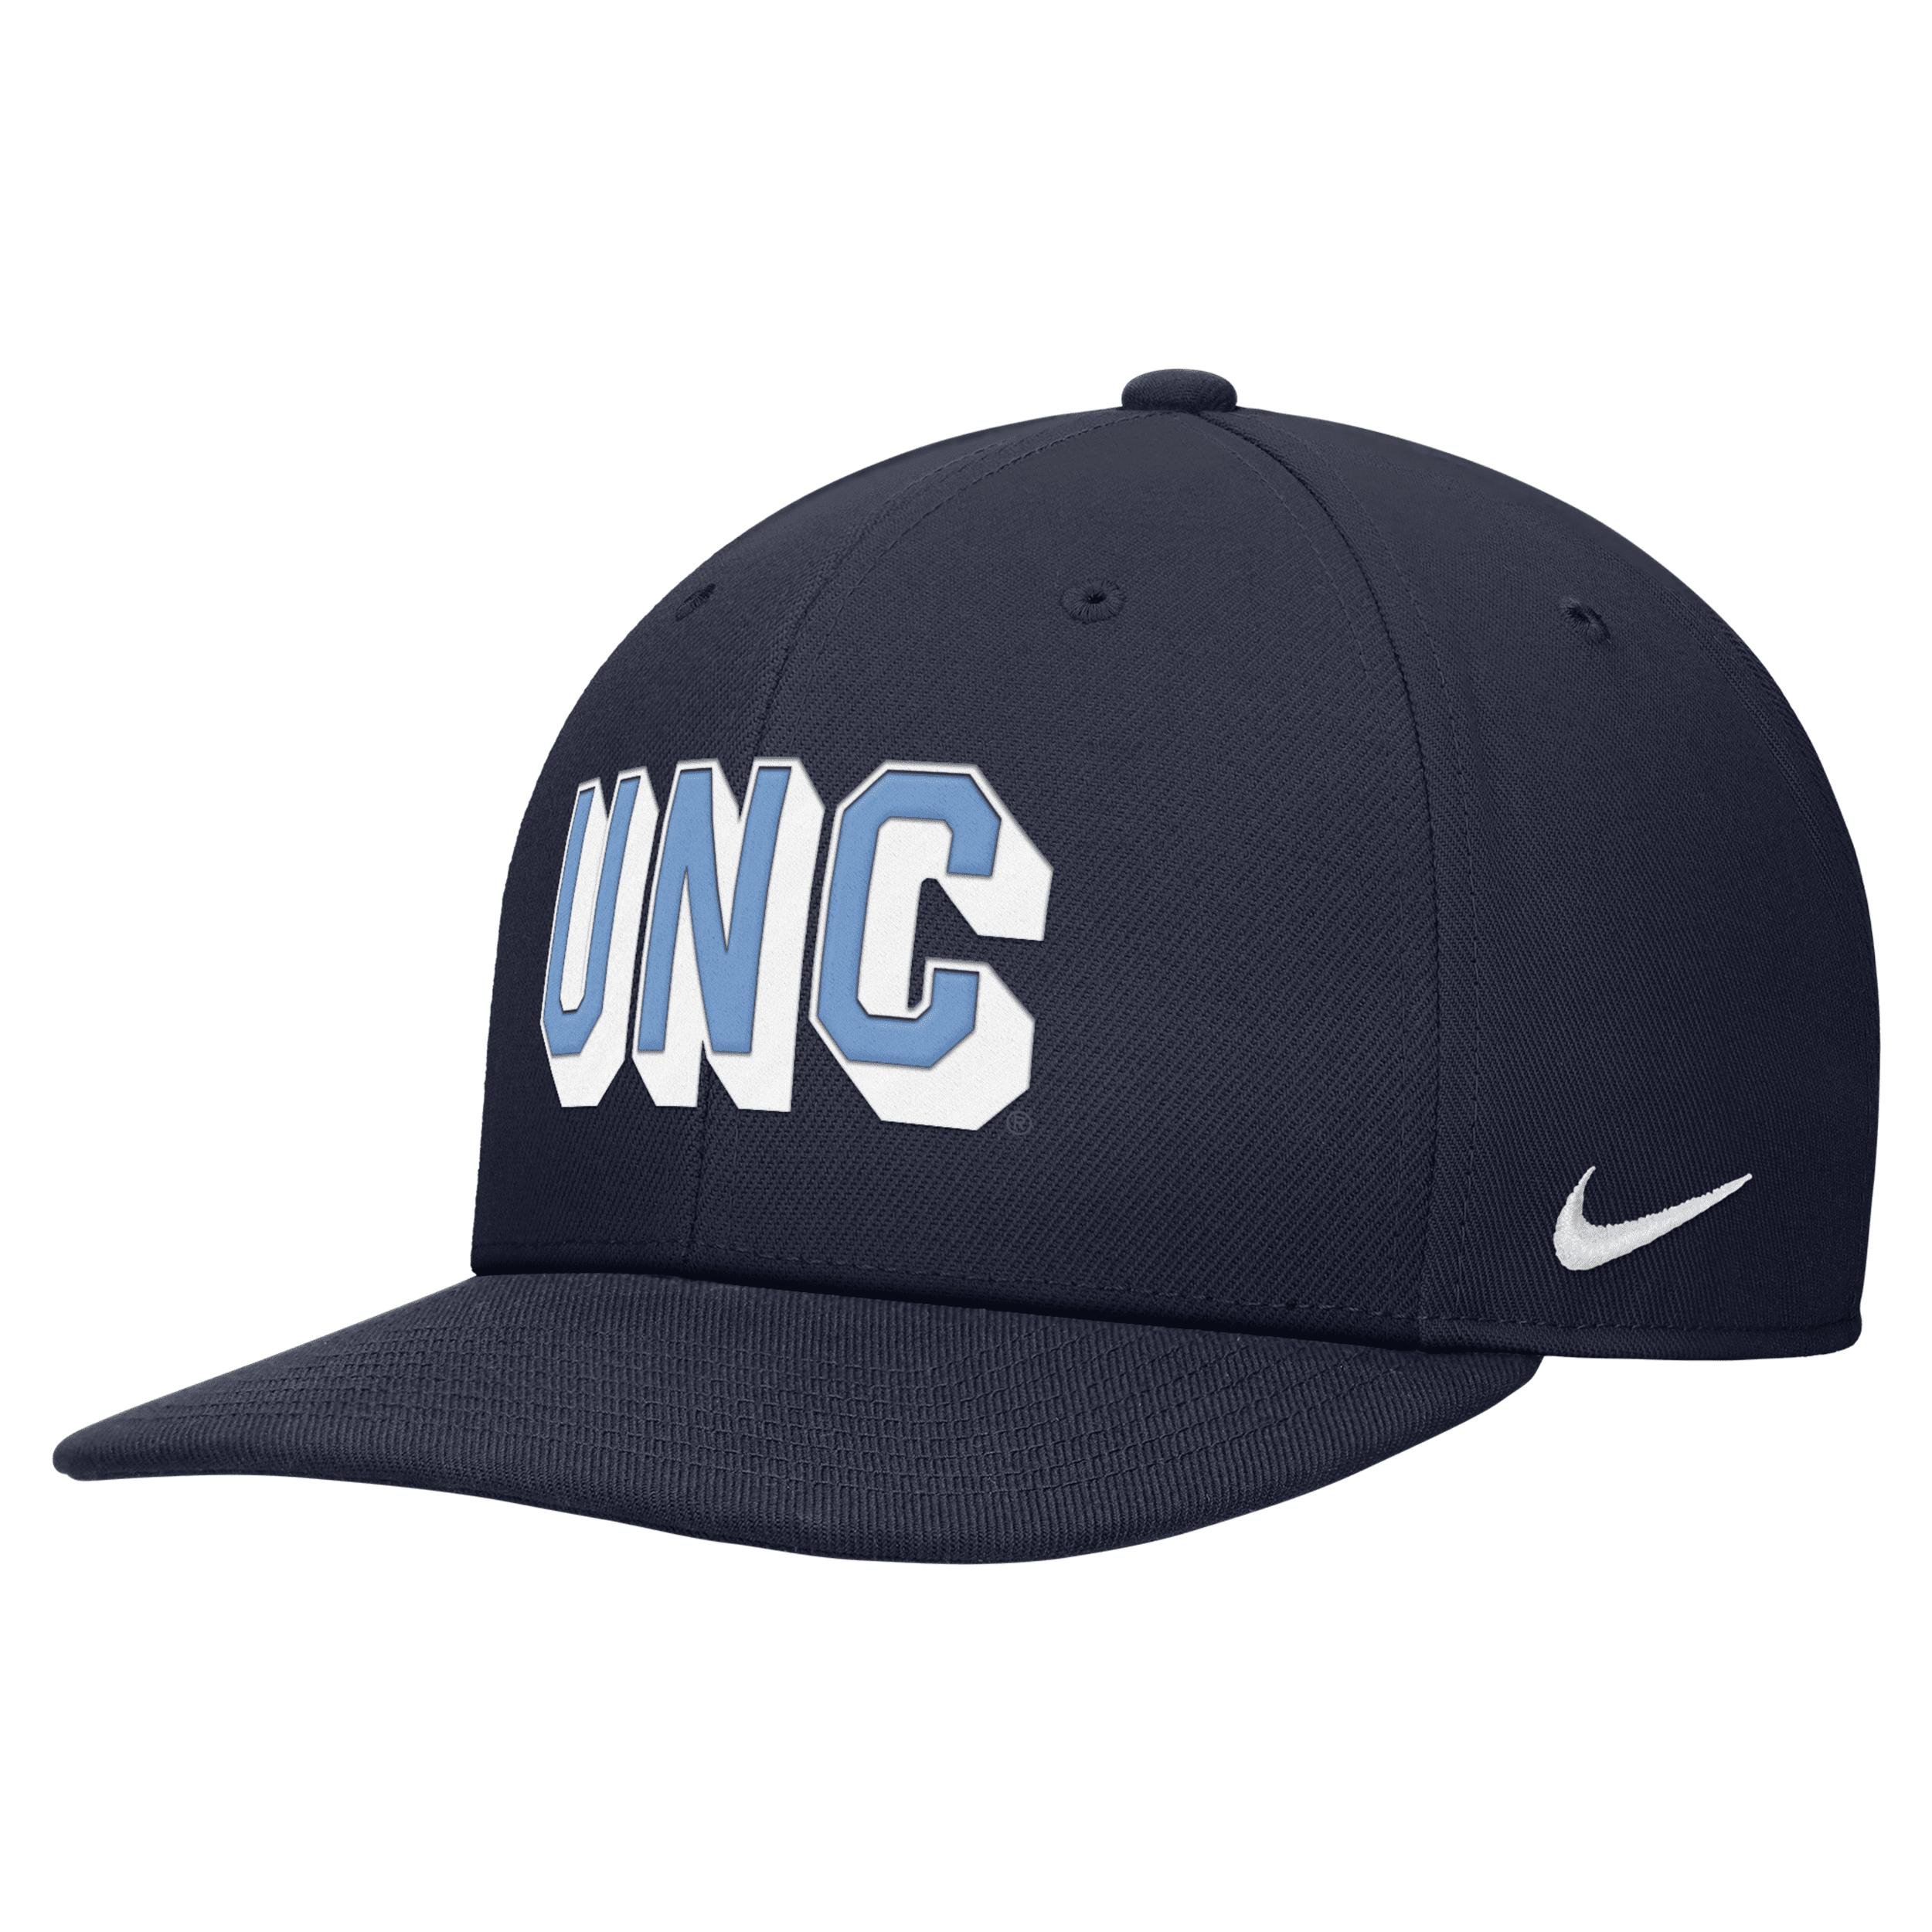 UNC Nike Unisex College Snapback Hat by NIKE